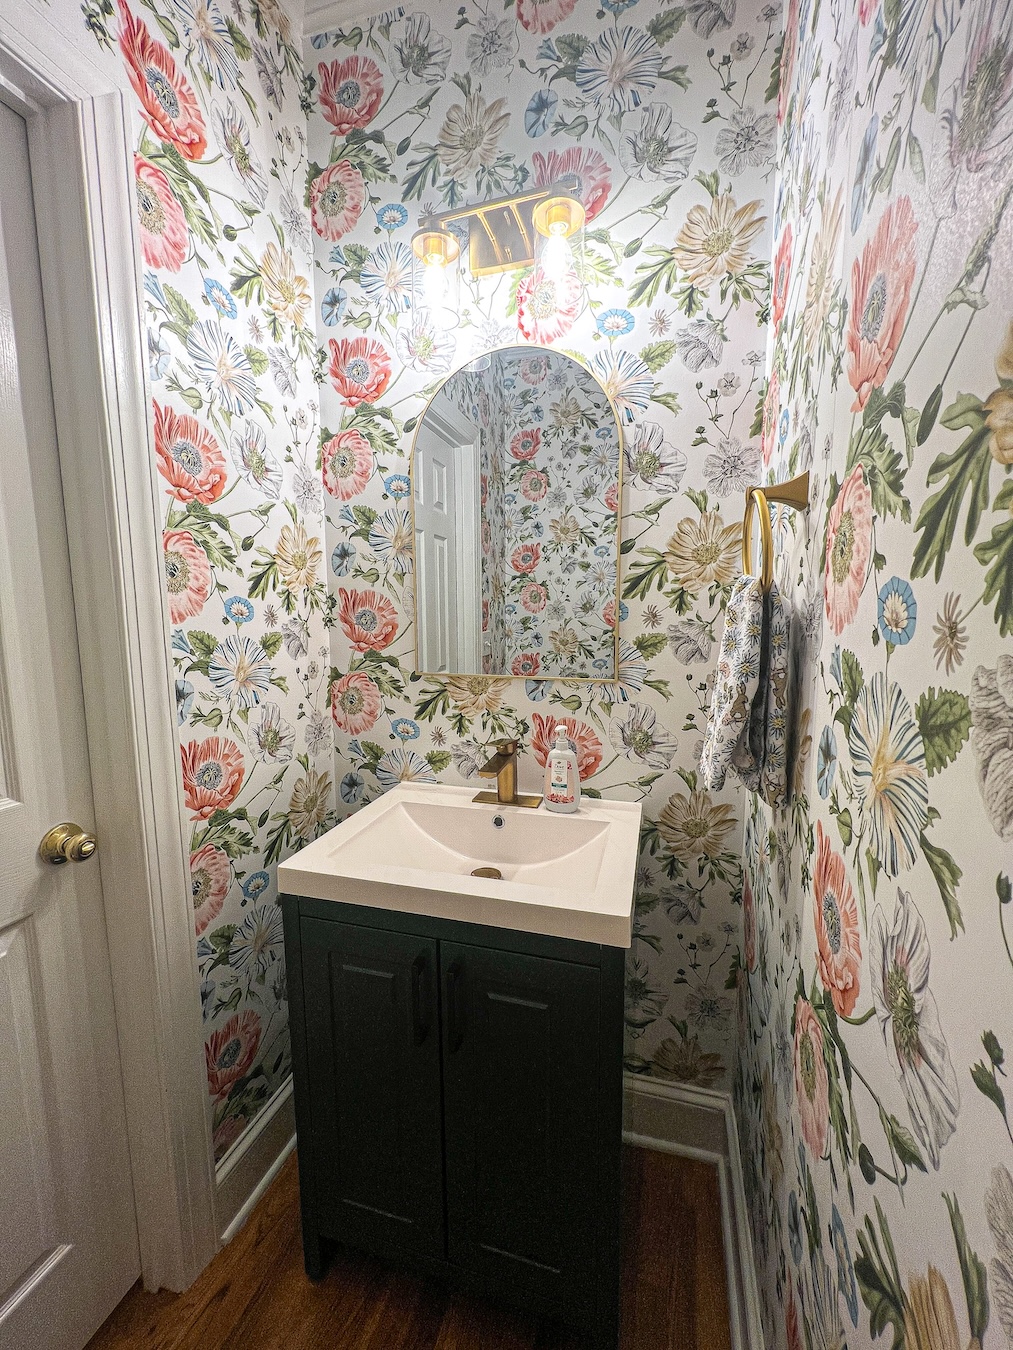 vanity upgrade in a budget half bathroom remodel for $500 | GoodtomiCha.com